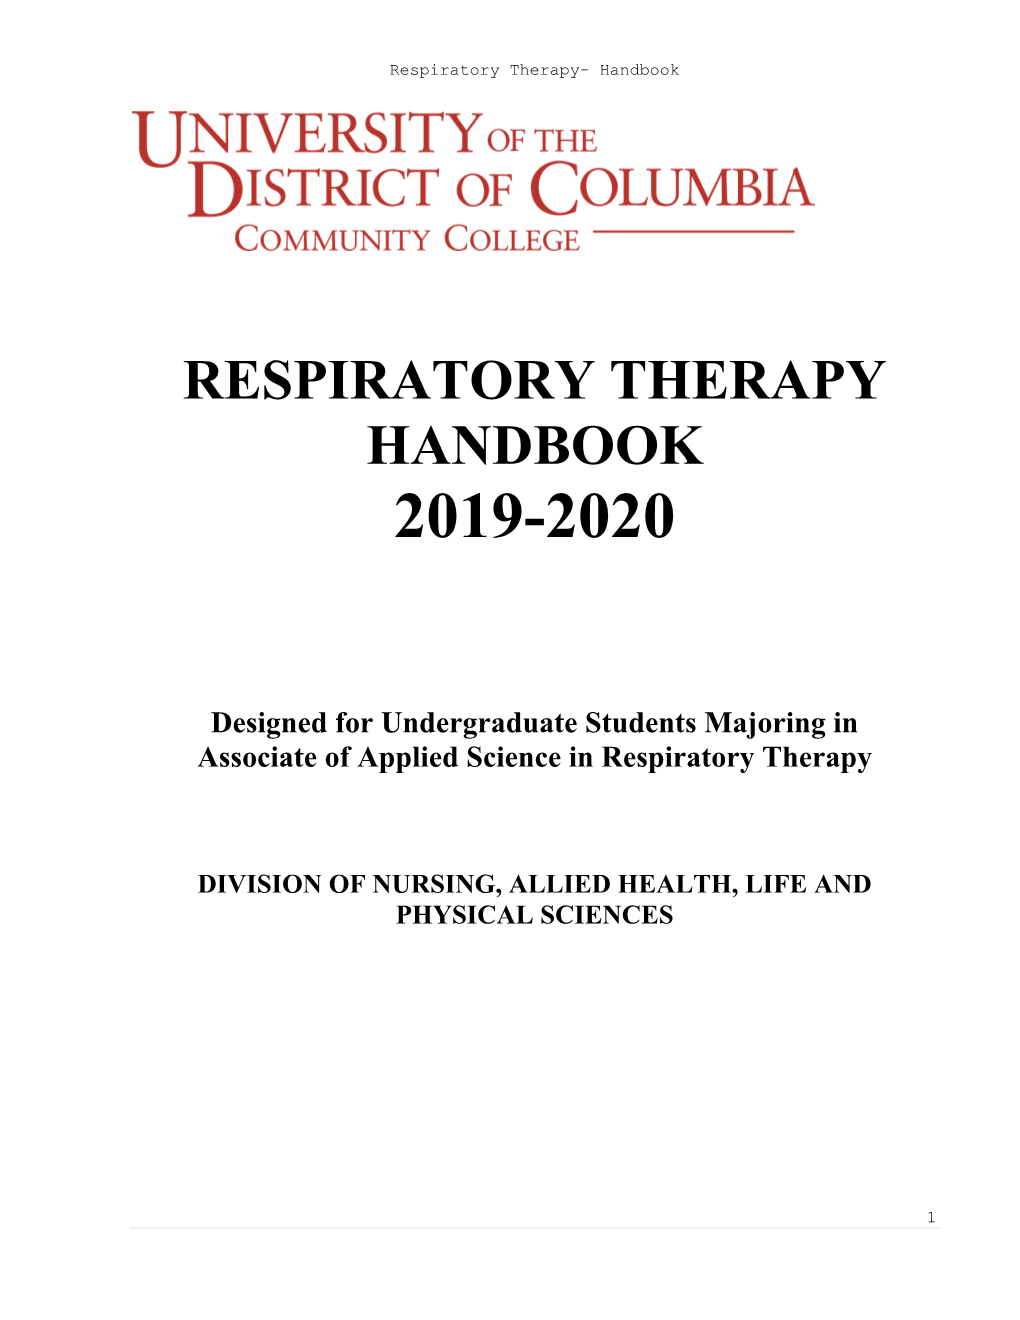 2019-2020 Respiratory Therapy Handbook